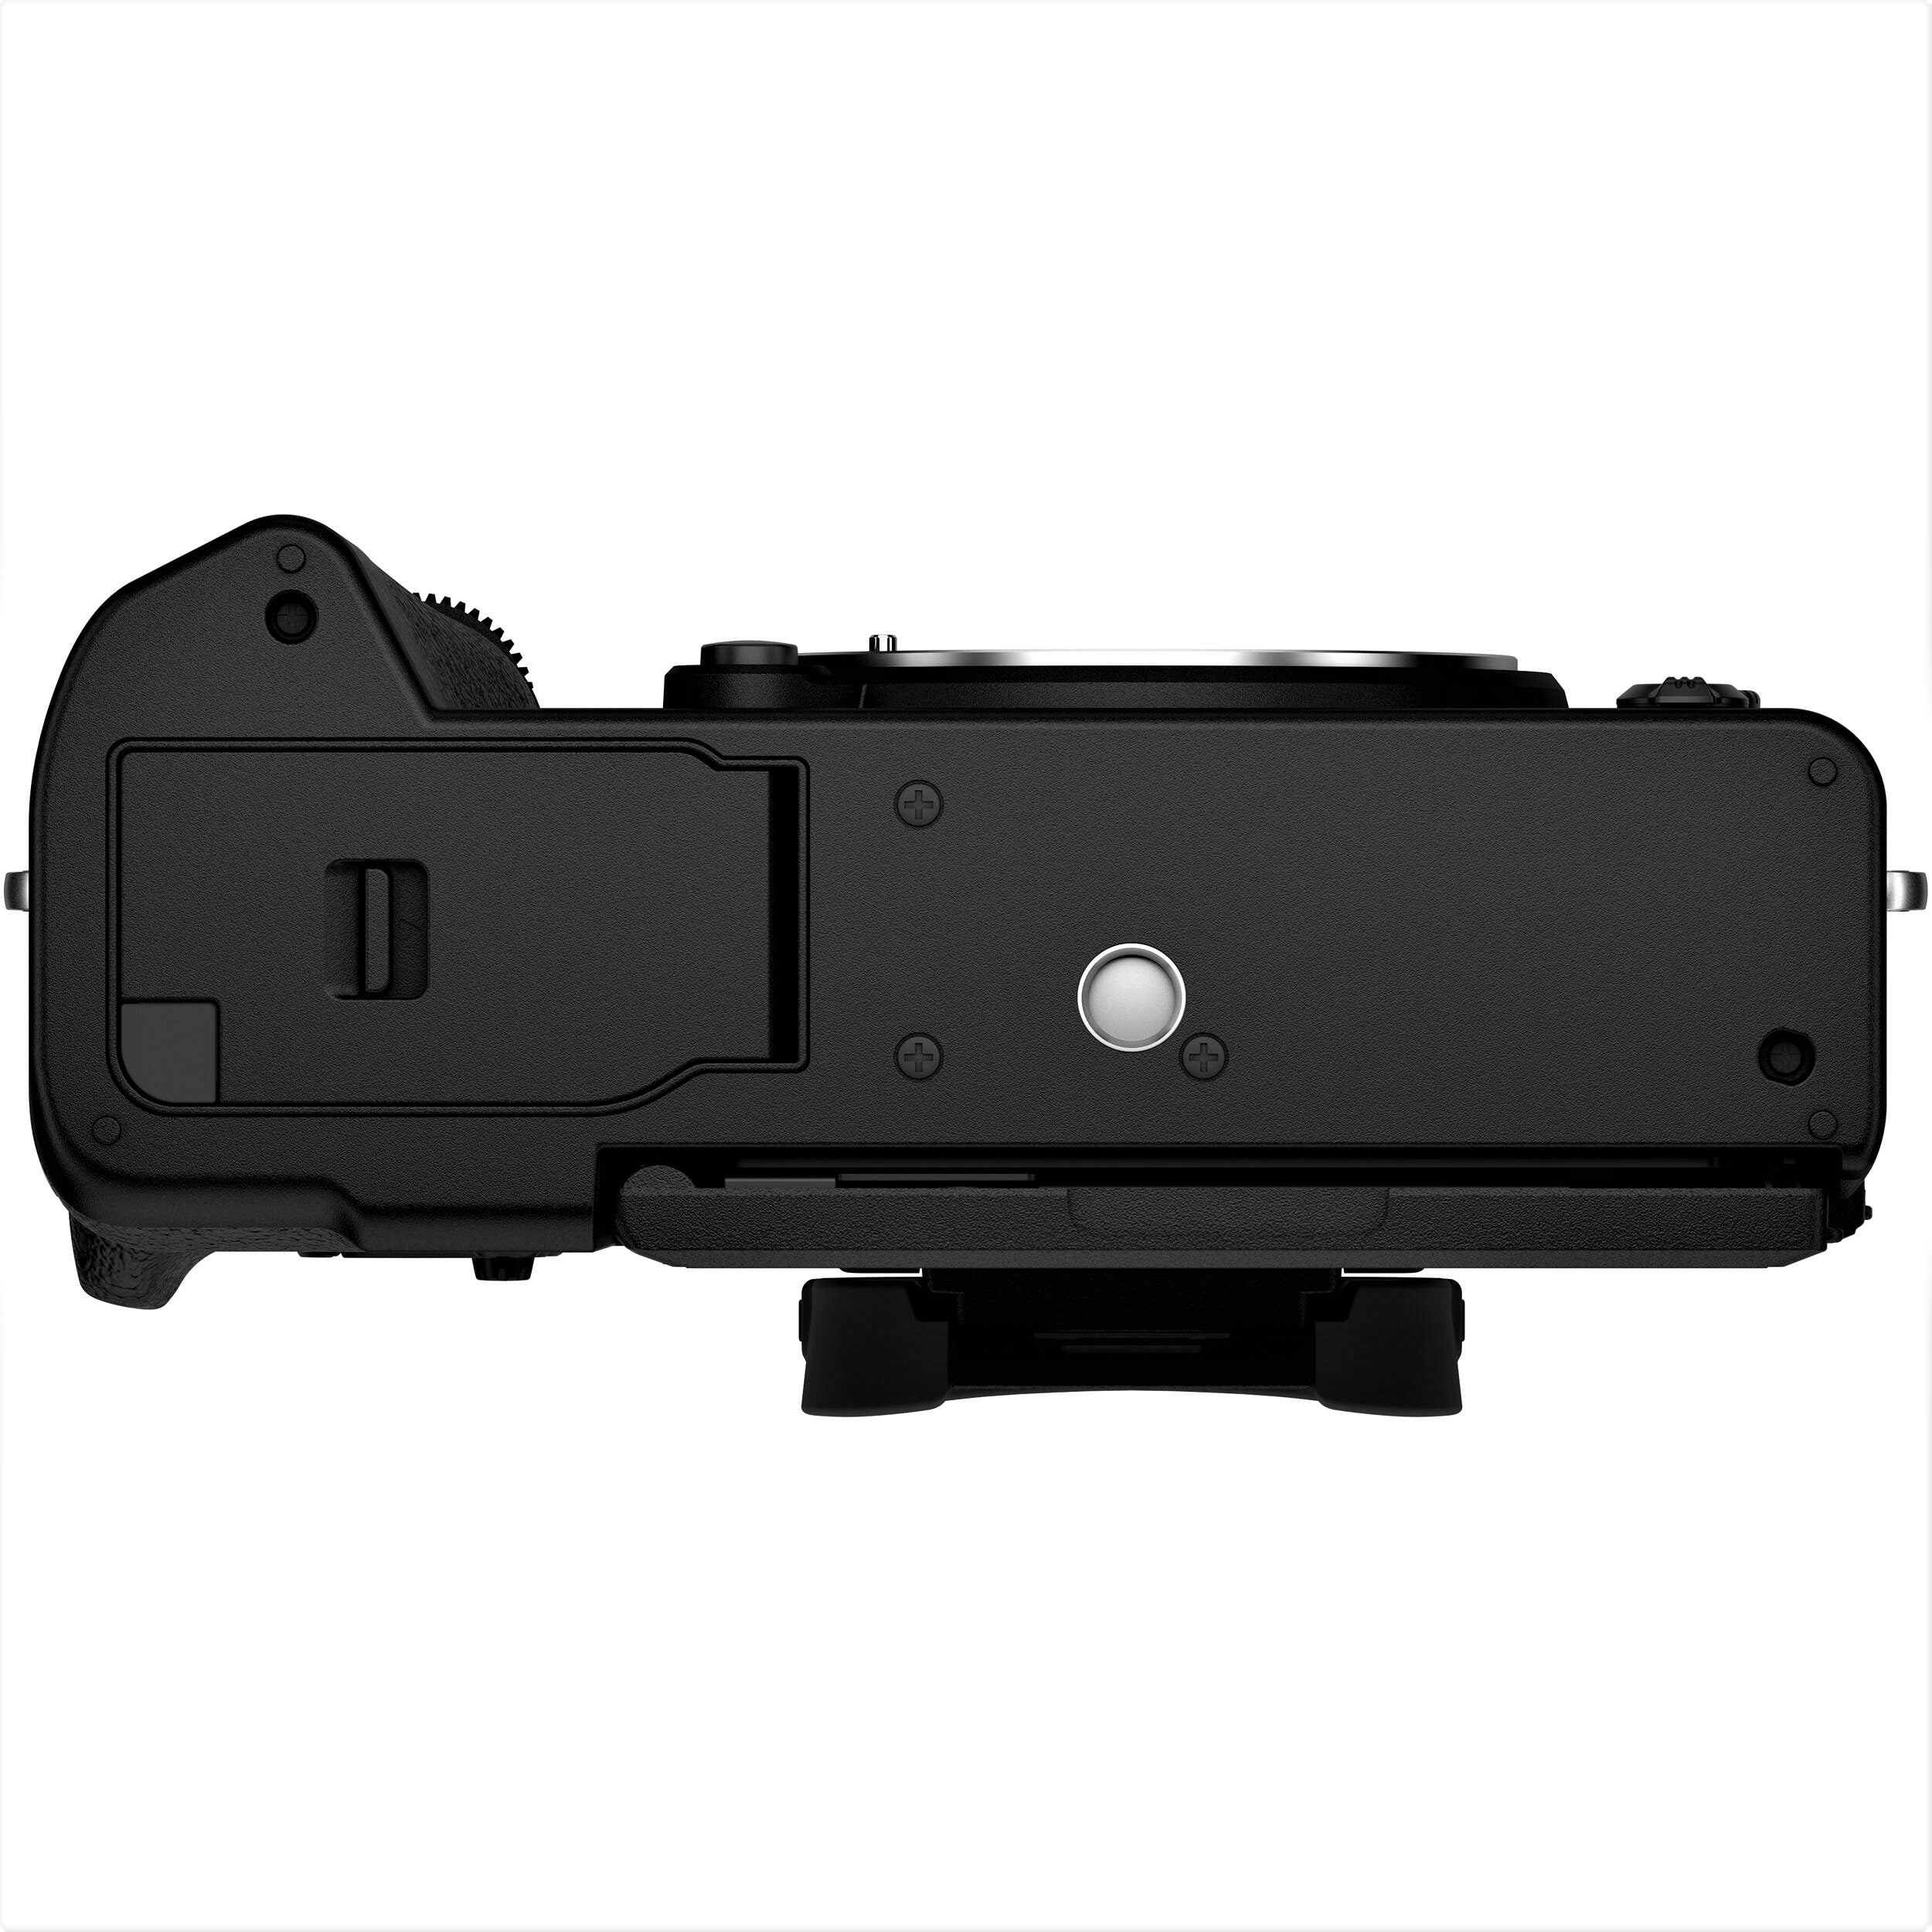 Fujifilm X-T5 Mirrorless Camera with 18-55mm Lens (Black) - Bottom View